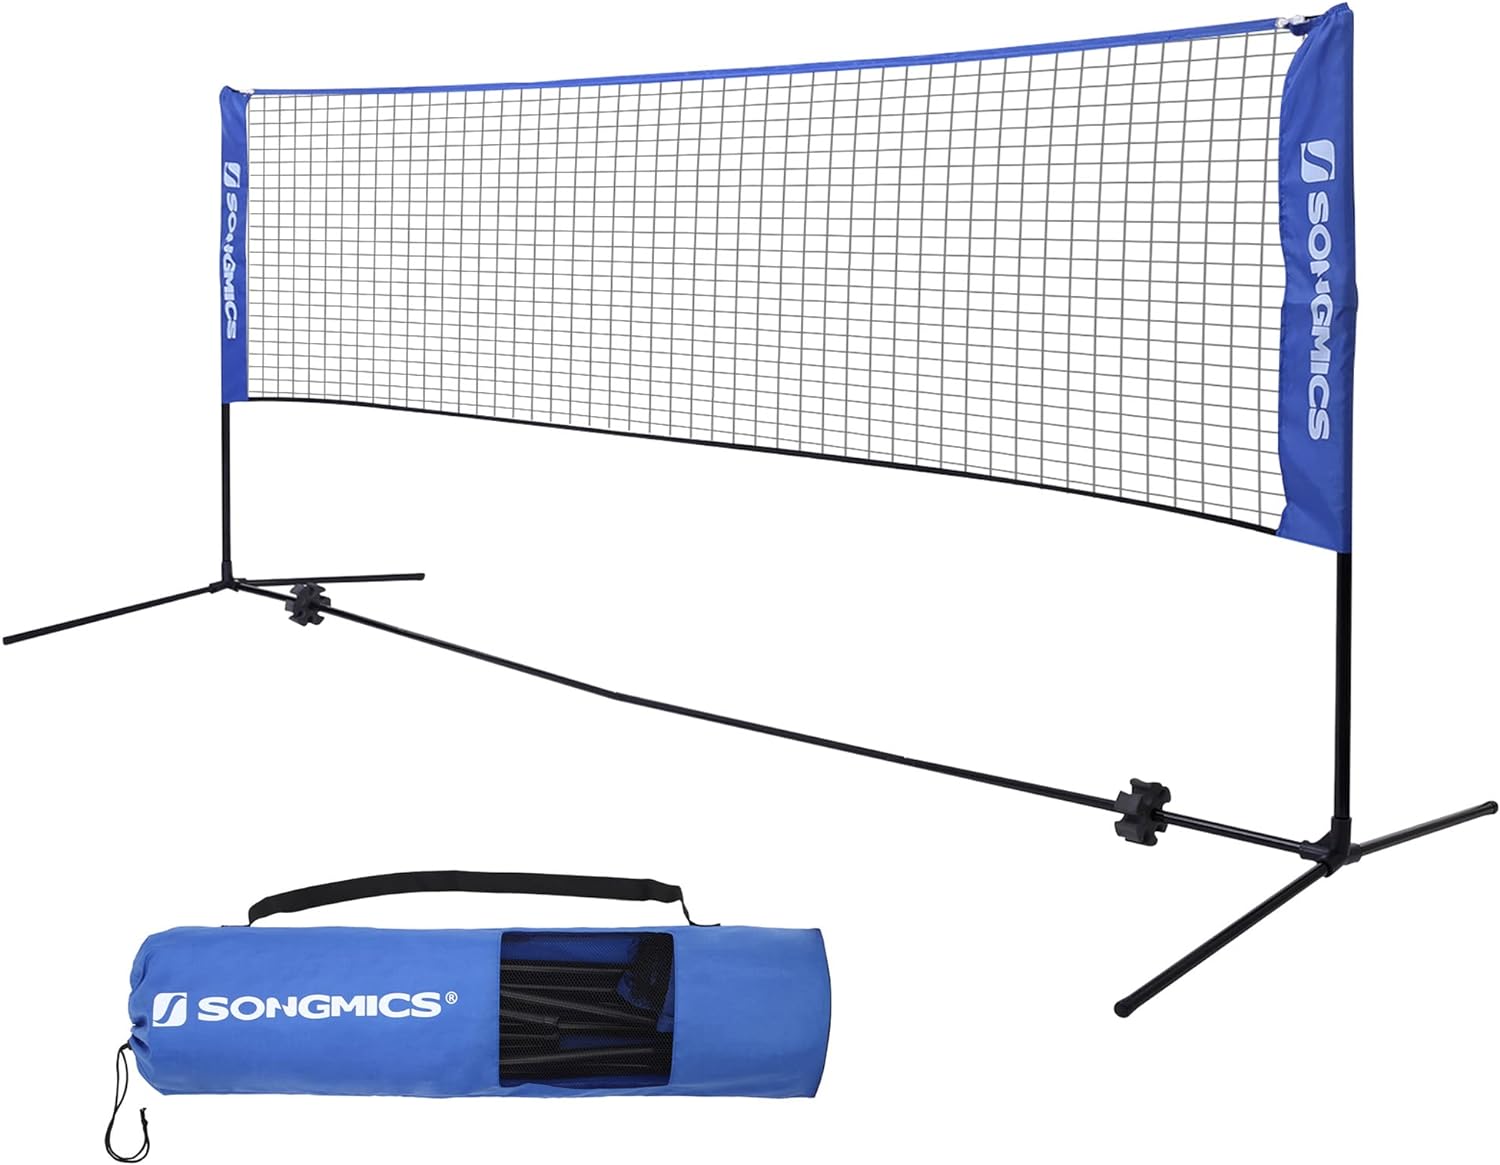 SONGMICS 4m Portable Tennis Badminton Net Blue